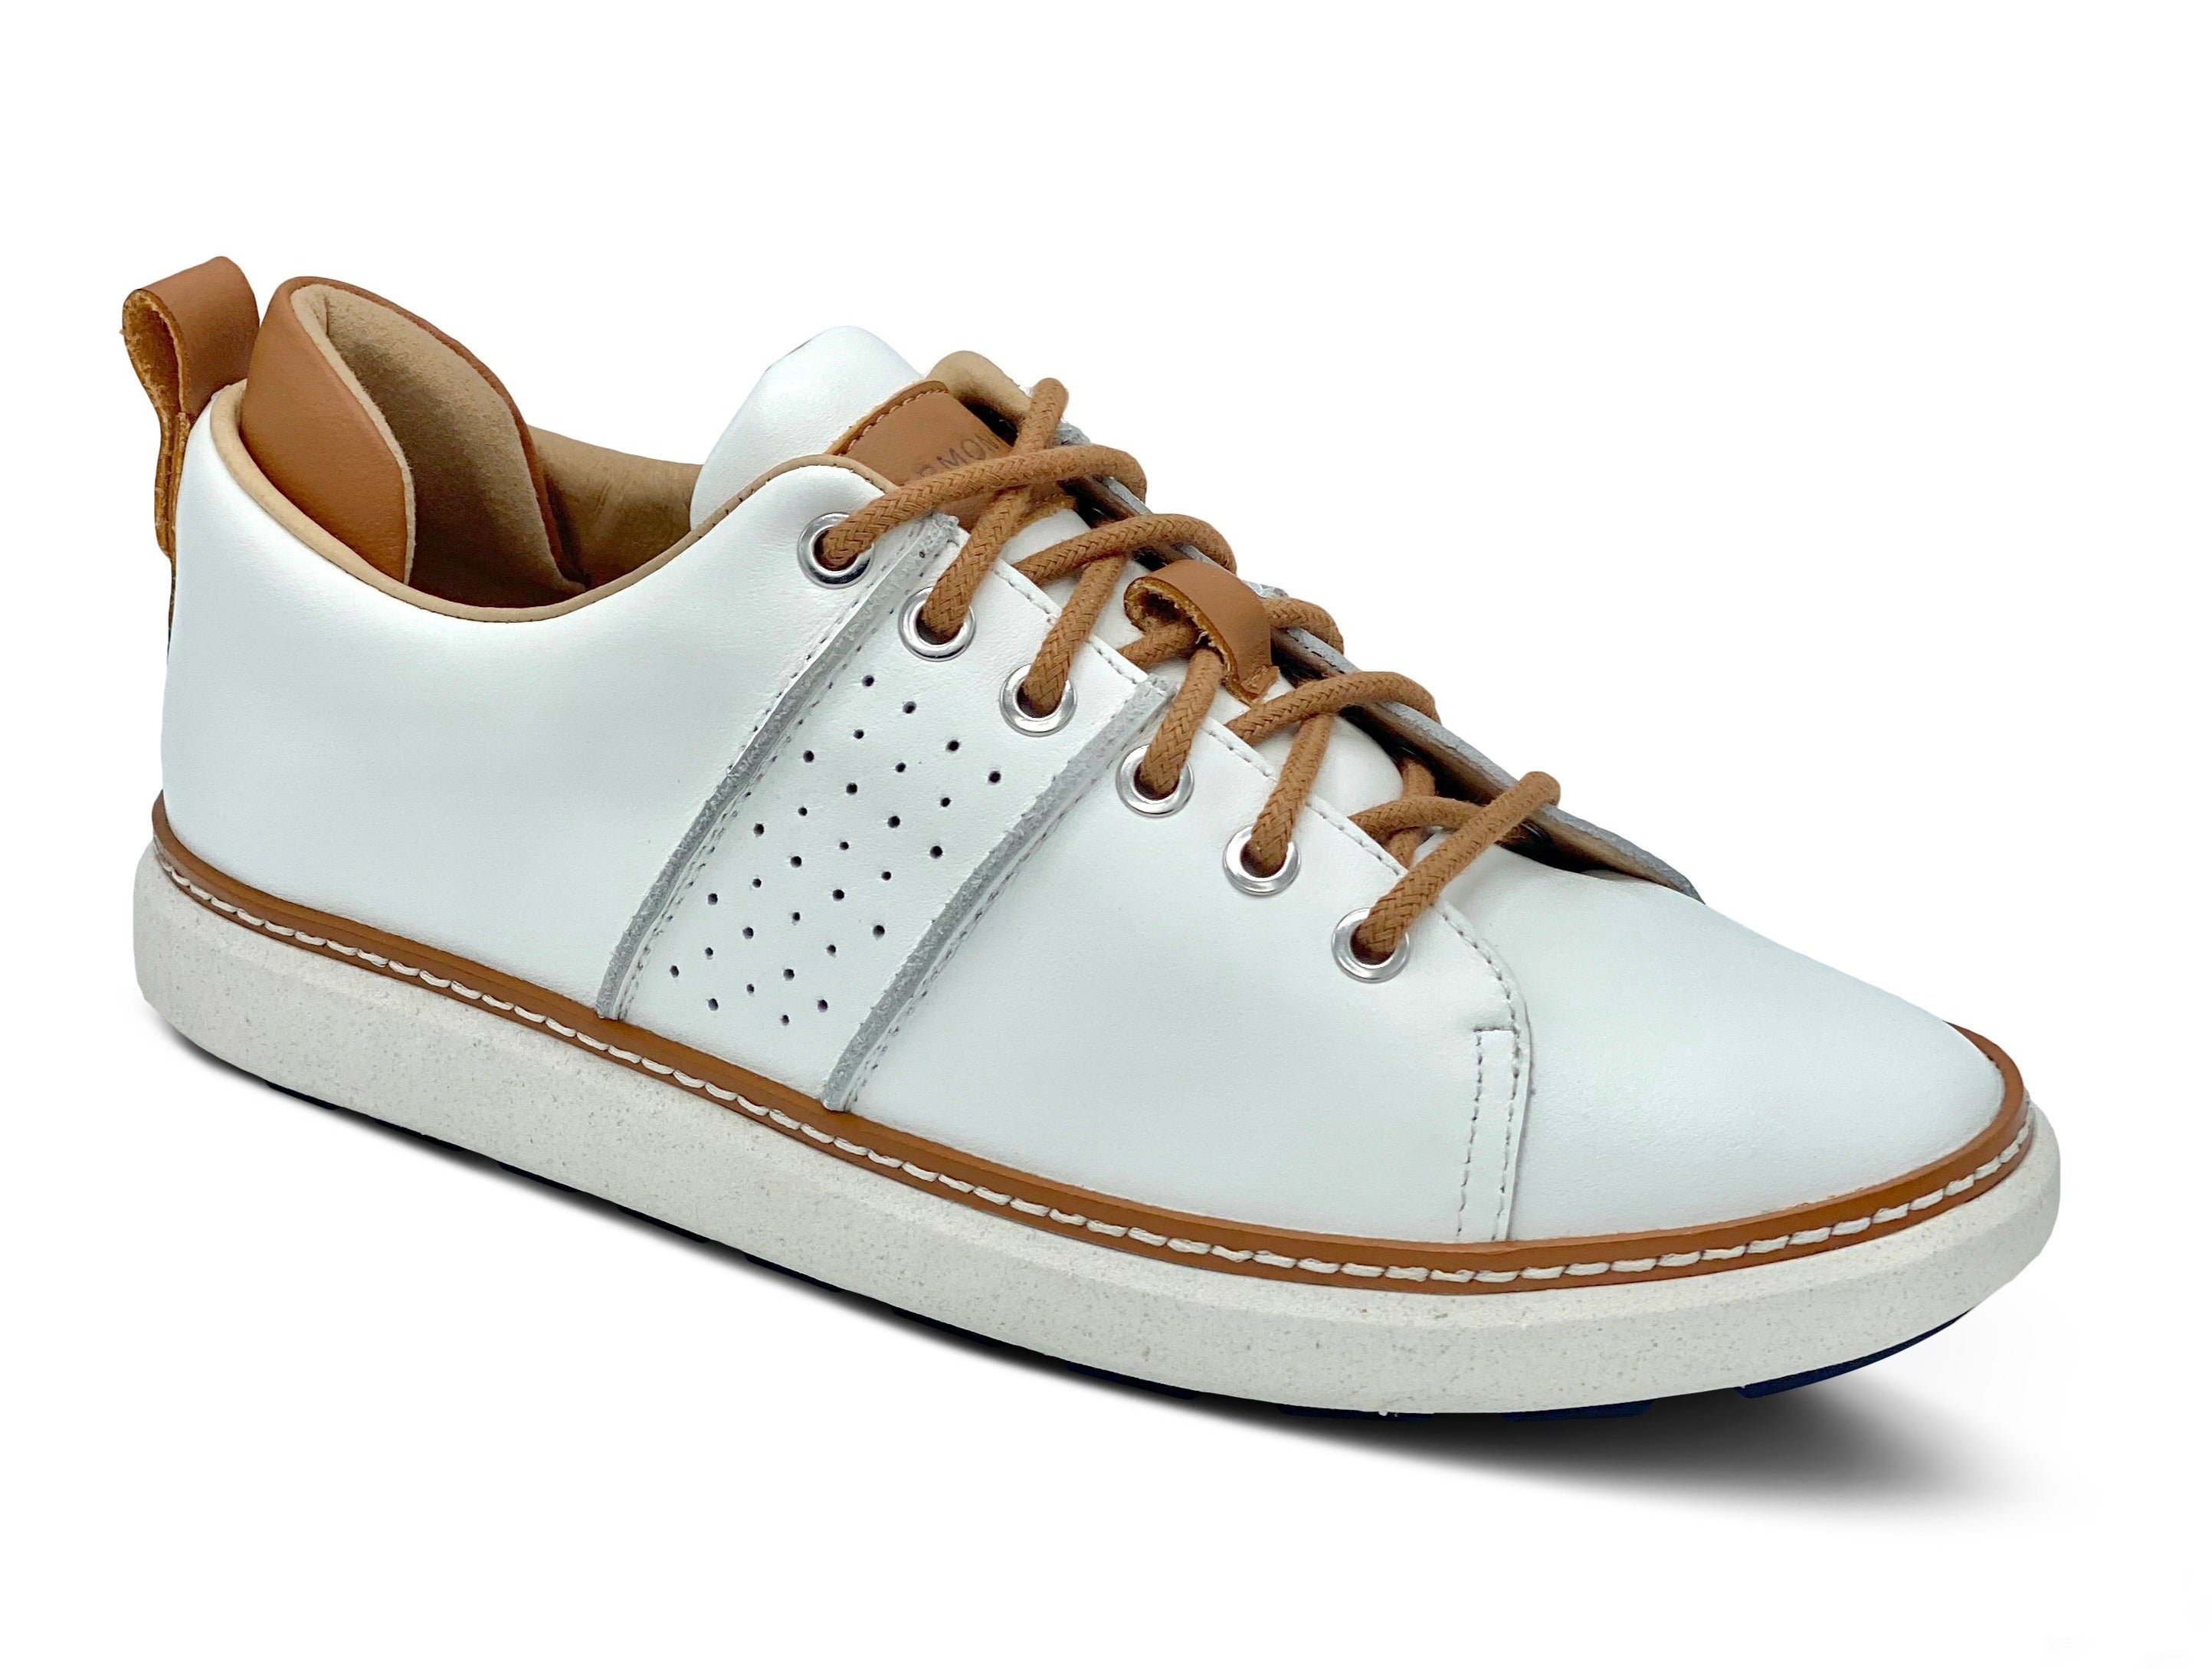 Comfortable white leather walking shoe